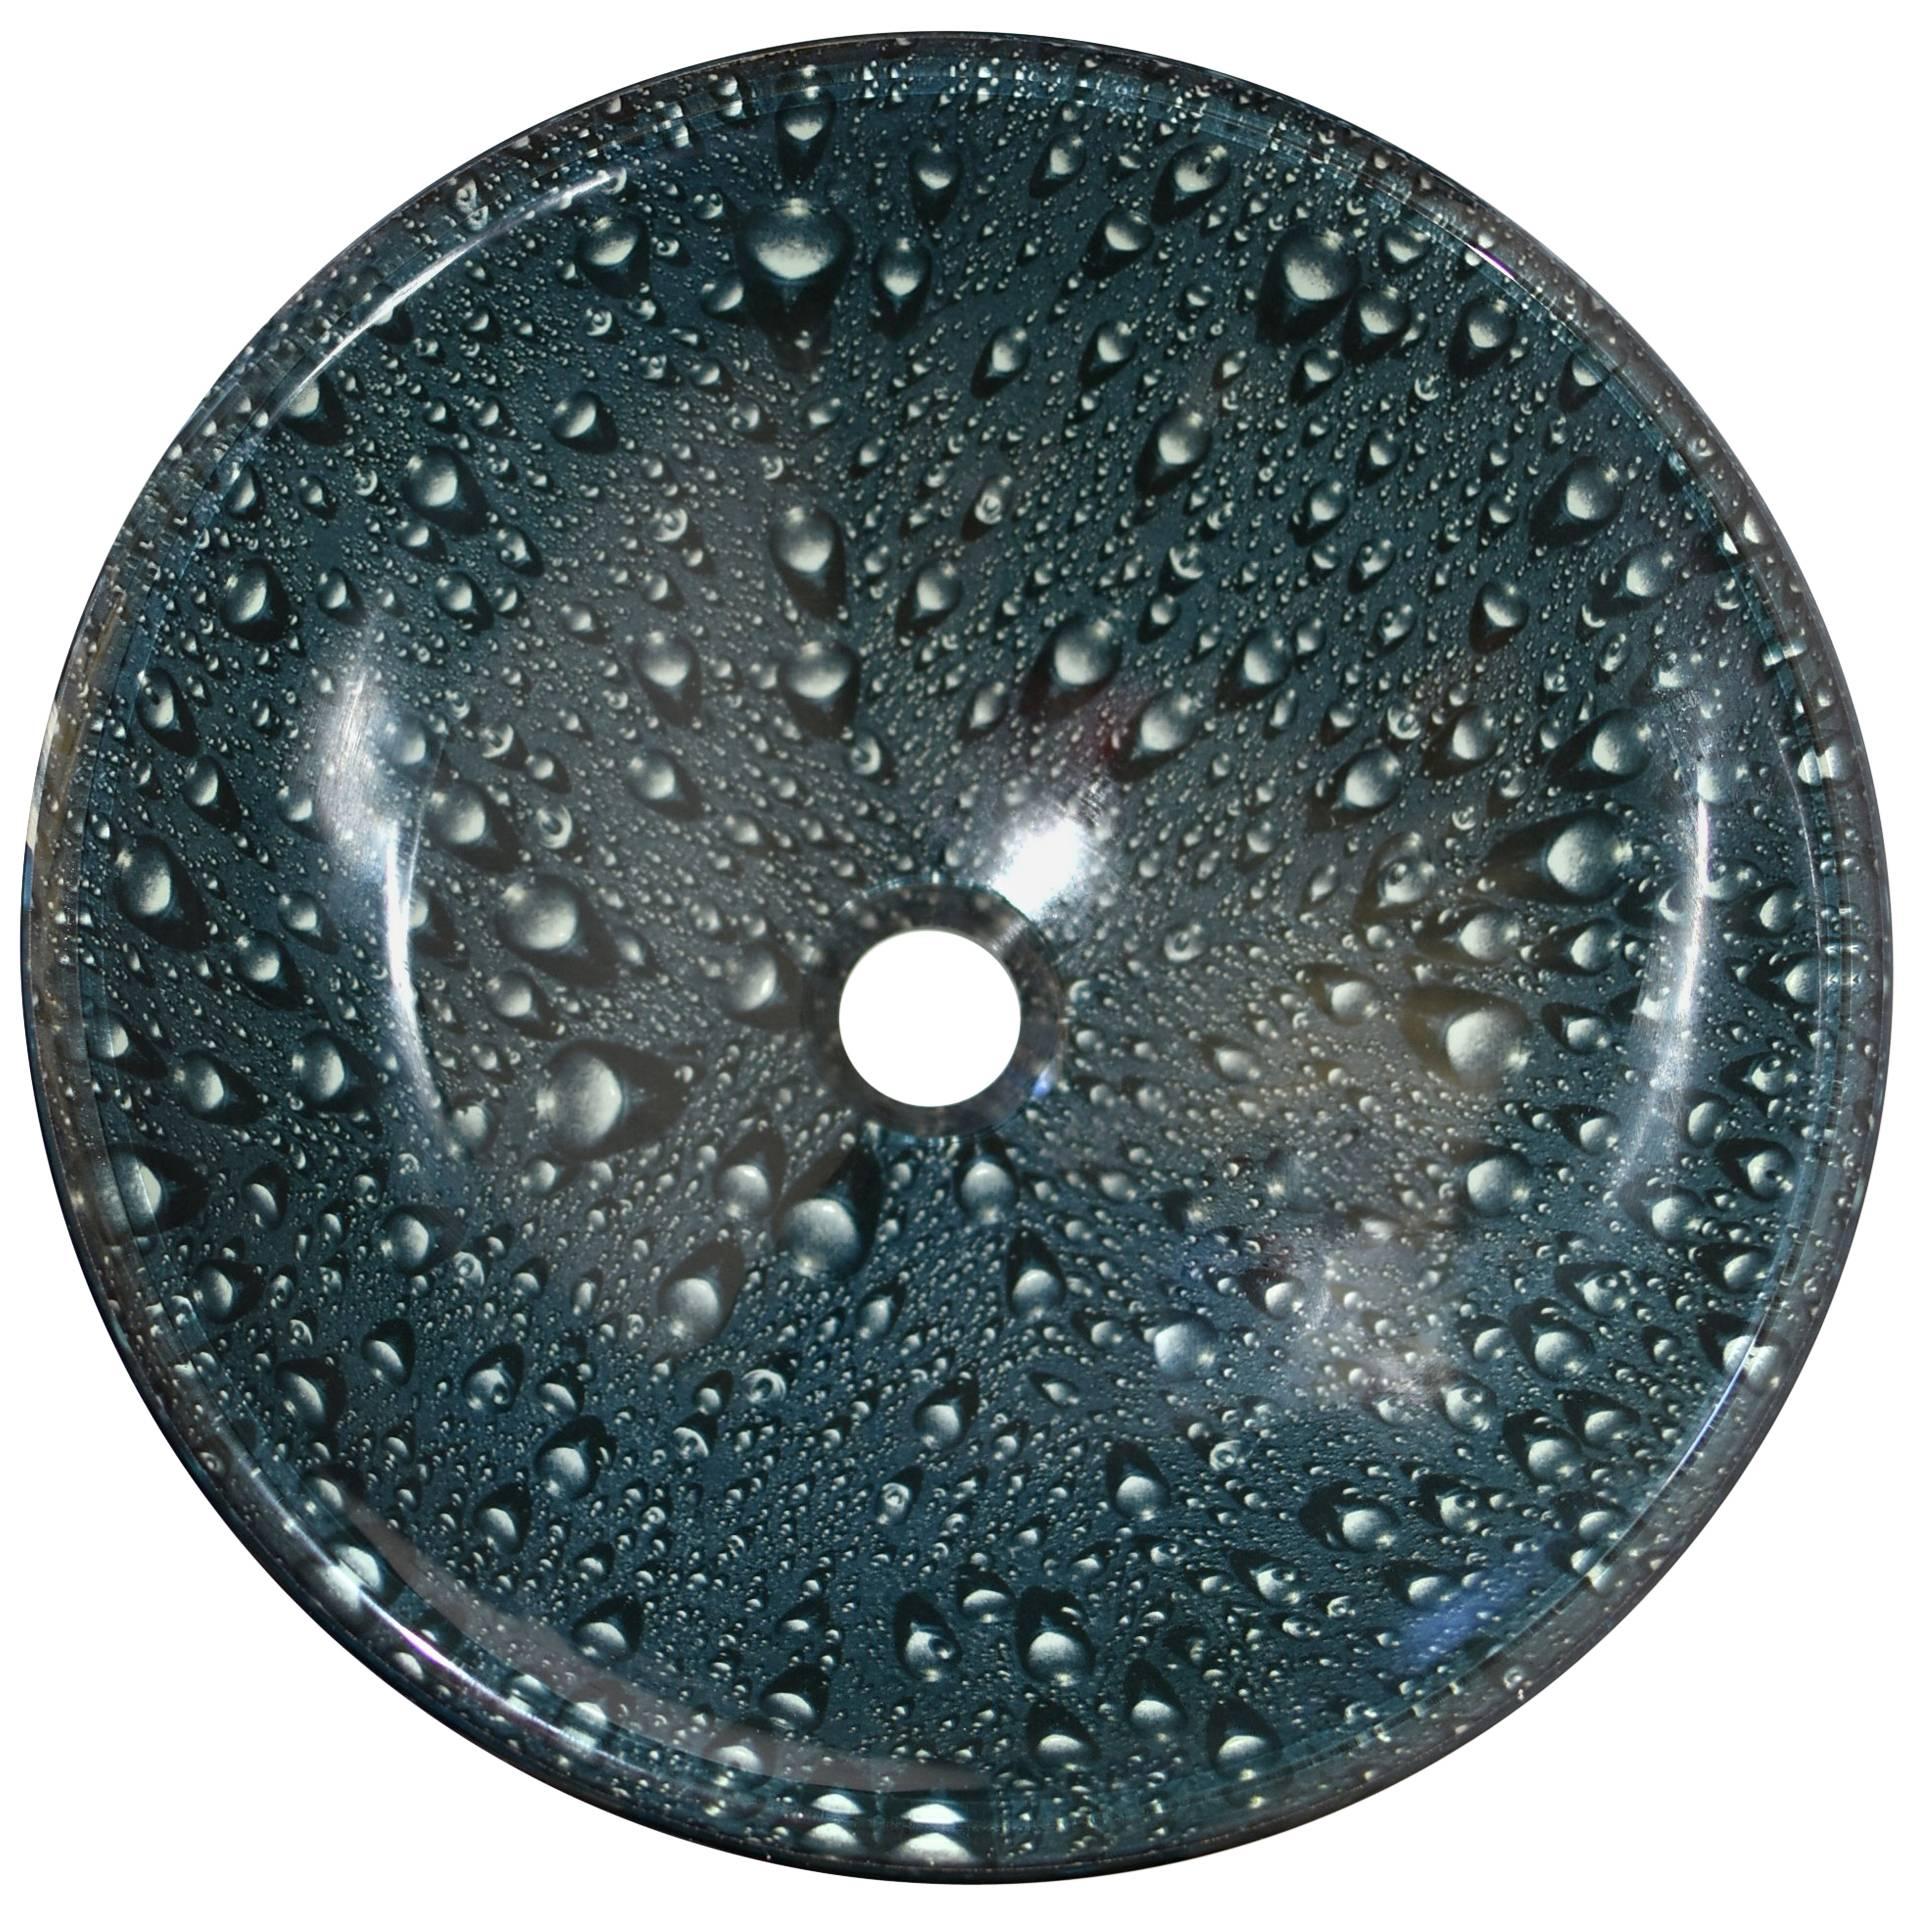 Blue Glass Sink with Rain Drop Pattern, Planter